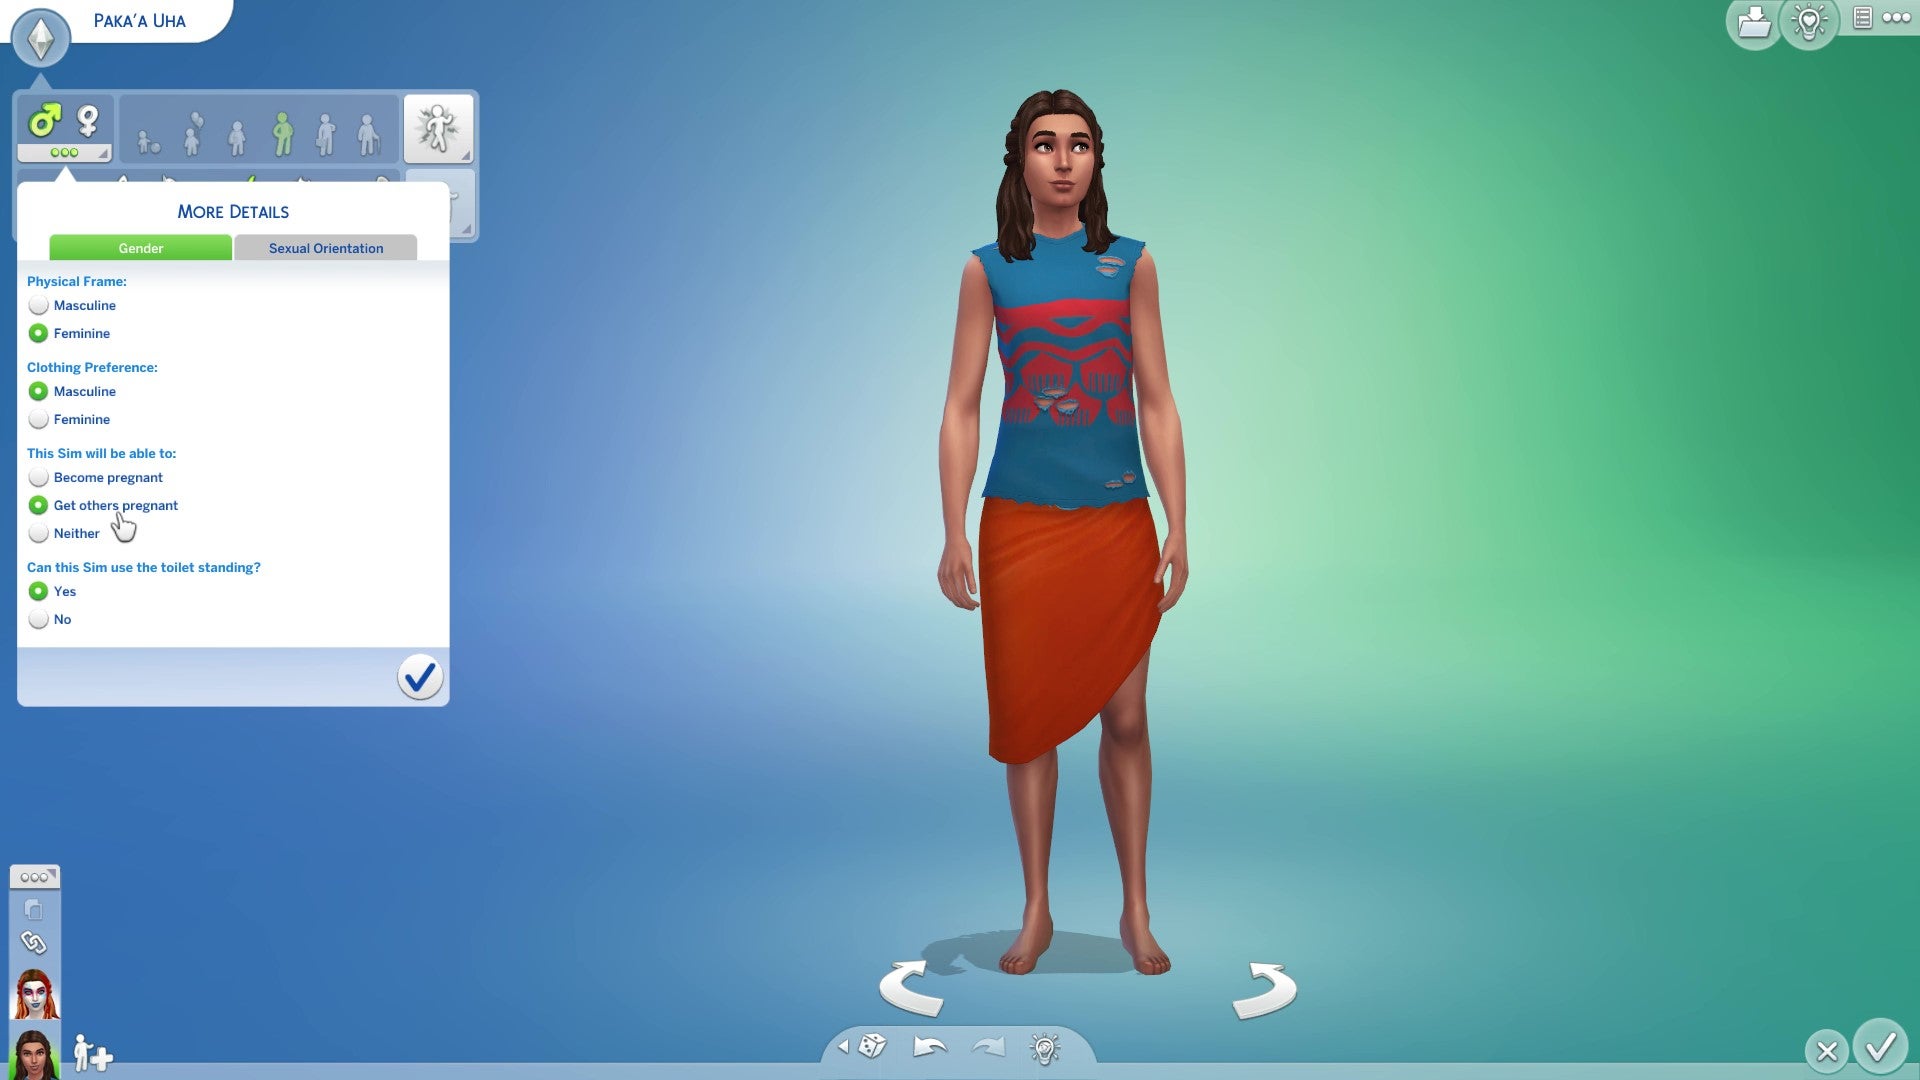 The Sims 4 gender and sexual orientation customisation Rock Paper Shotgun